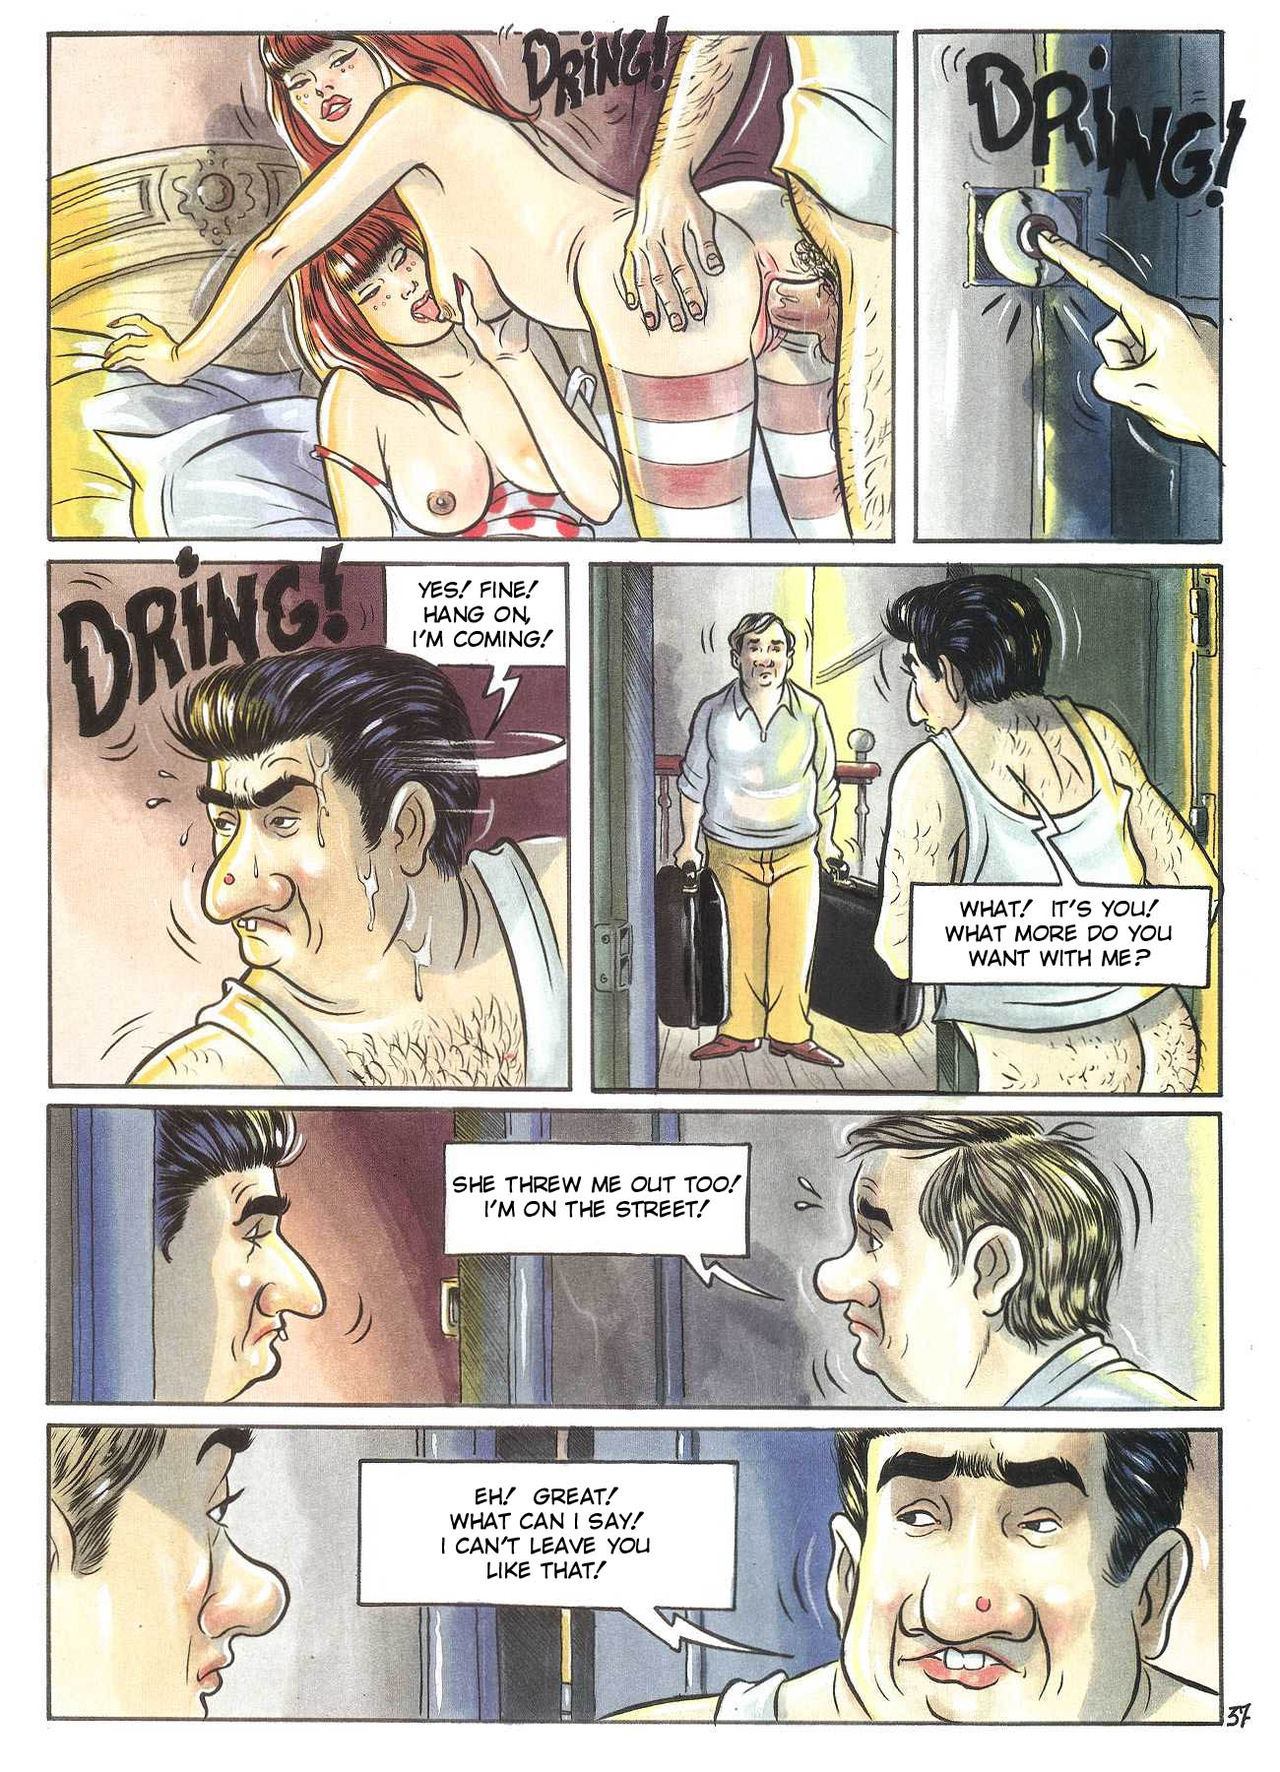 Порно комиксы маньяков фото 6